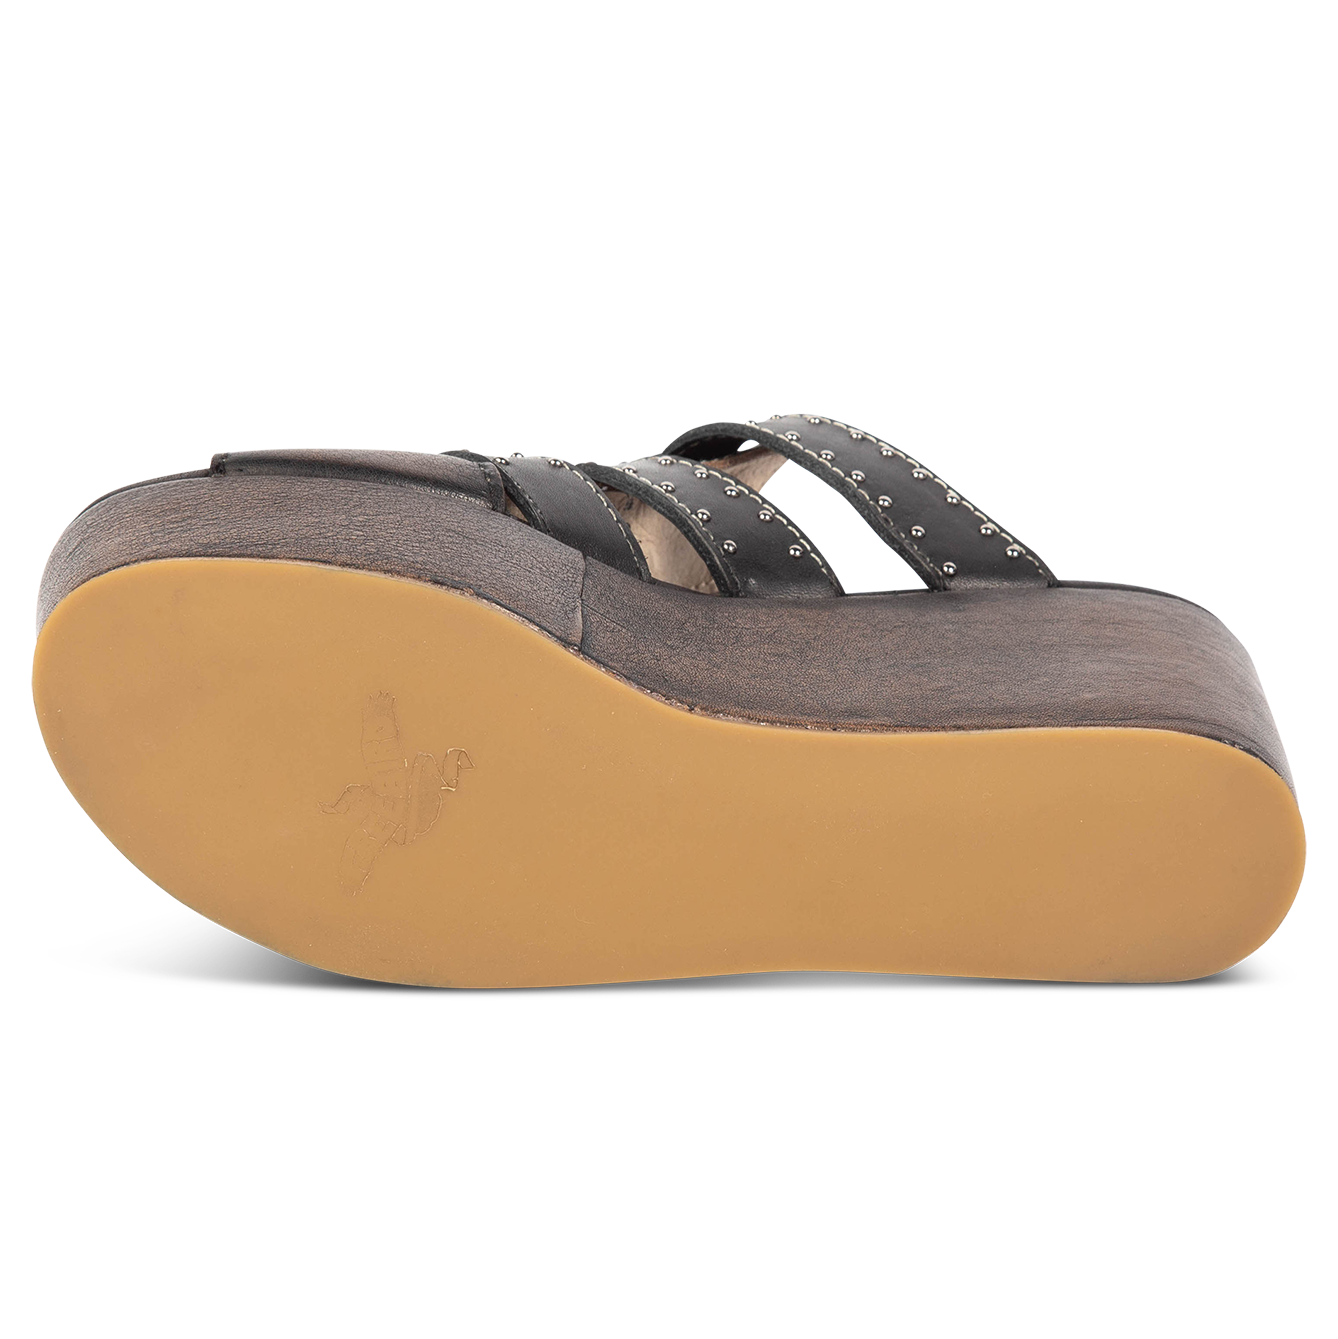 Rubber sole imprinted with FREEBIRD on women's Landi black platform sandal